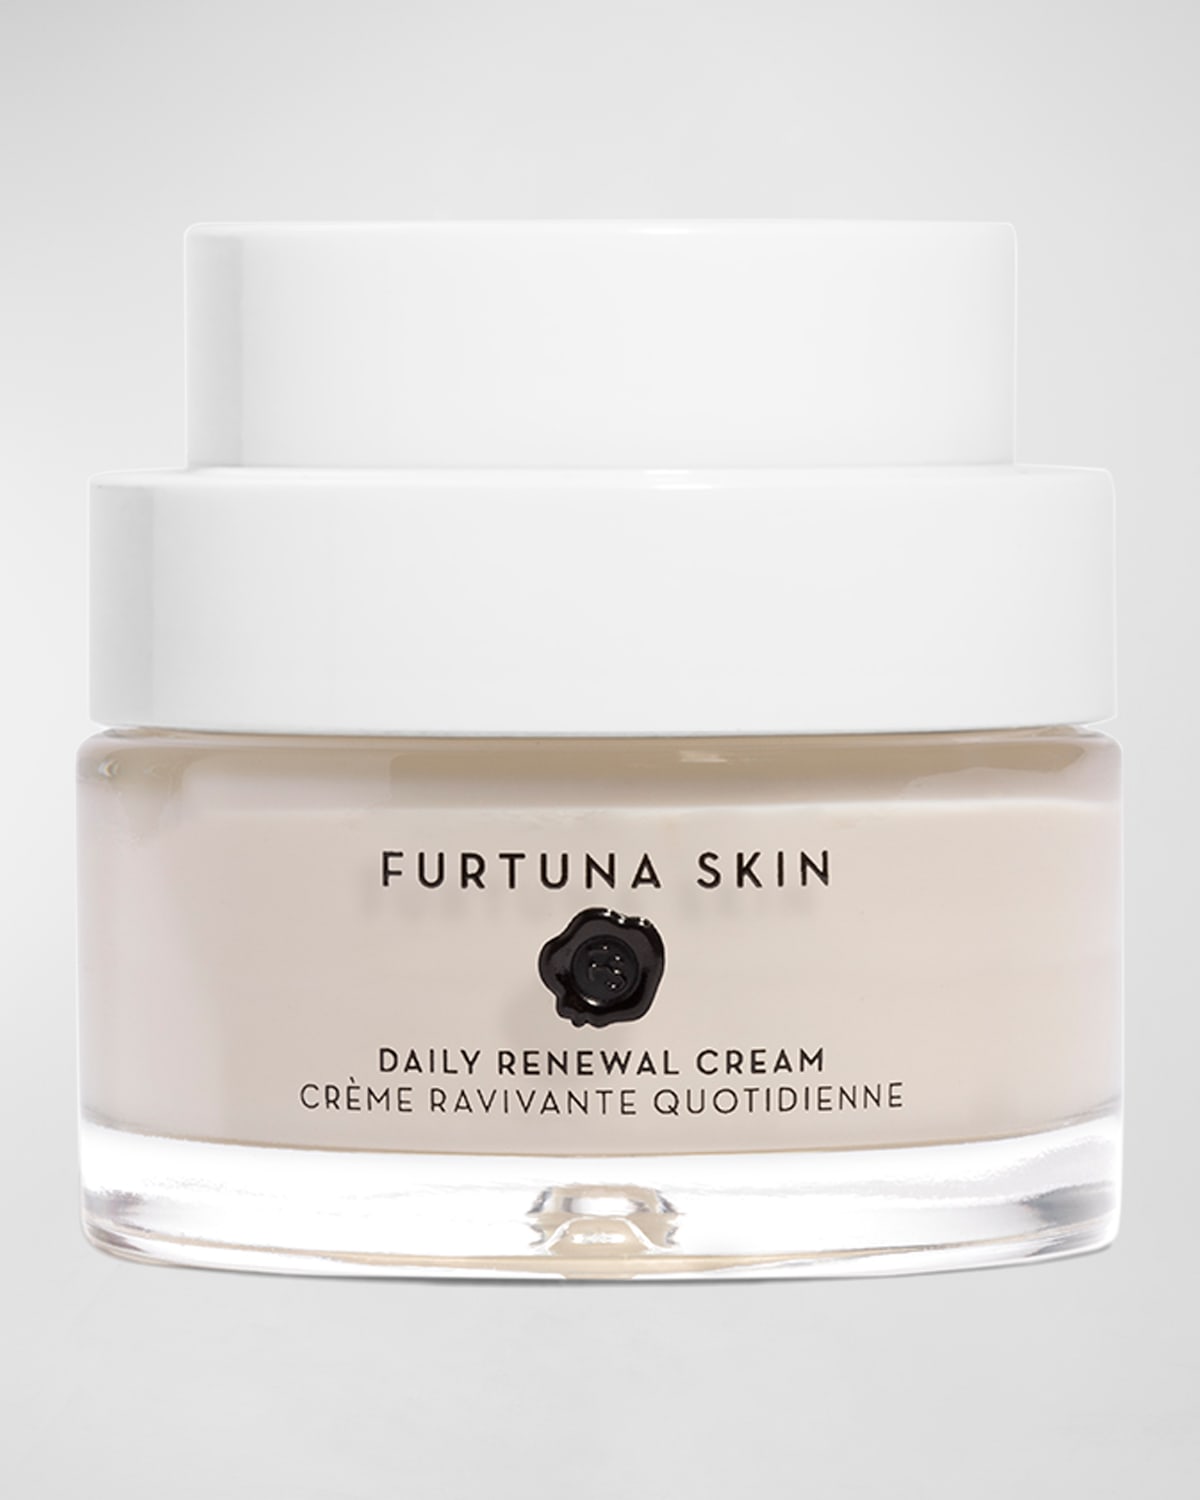 Furtuna Skin Perla Brillante Daily Renewal Cream, 1.7 oz.